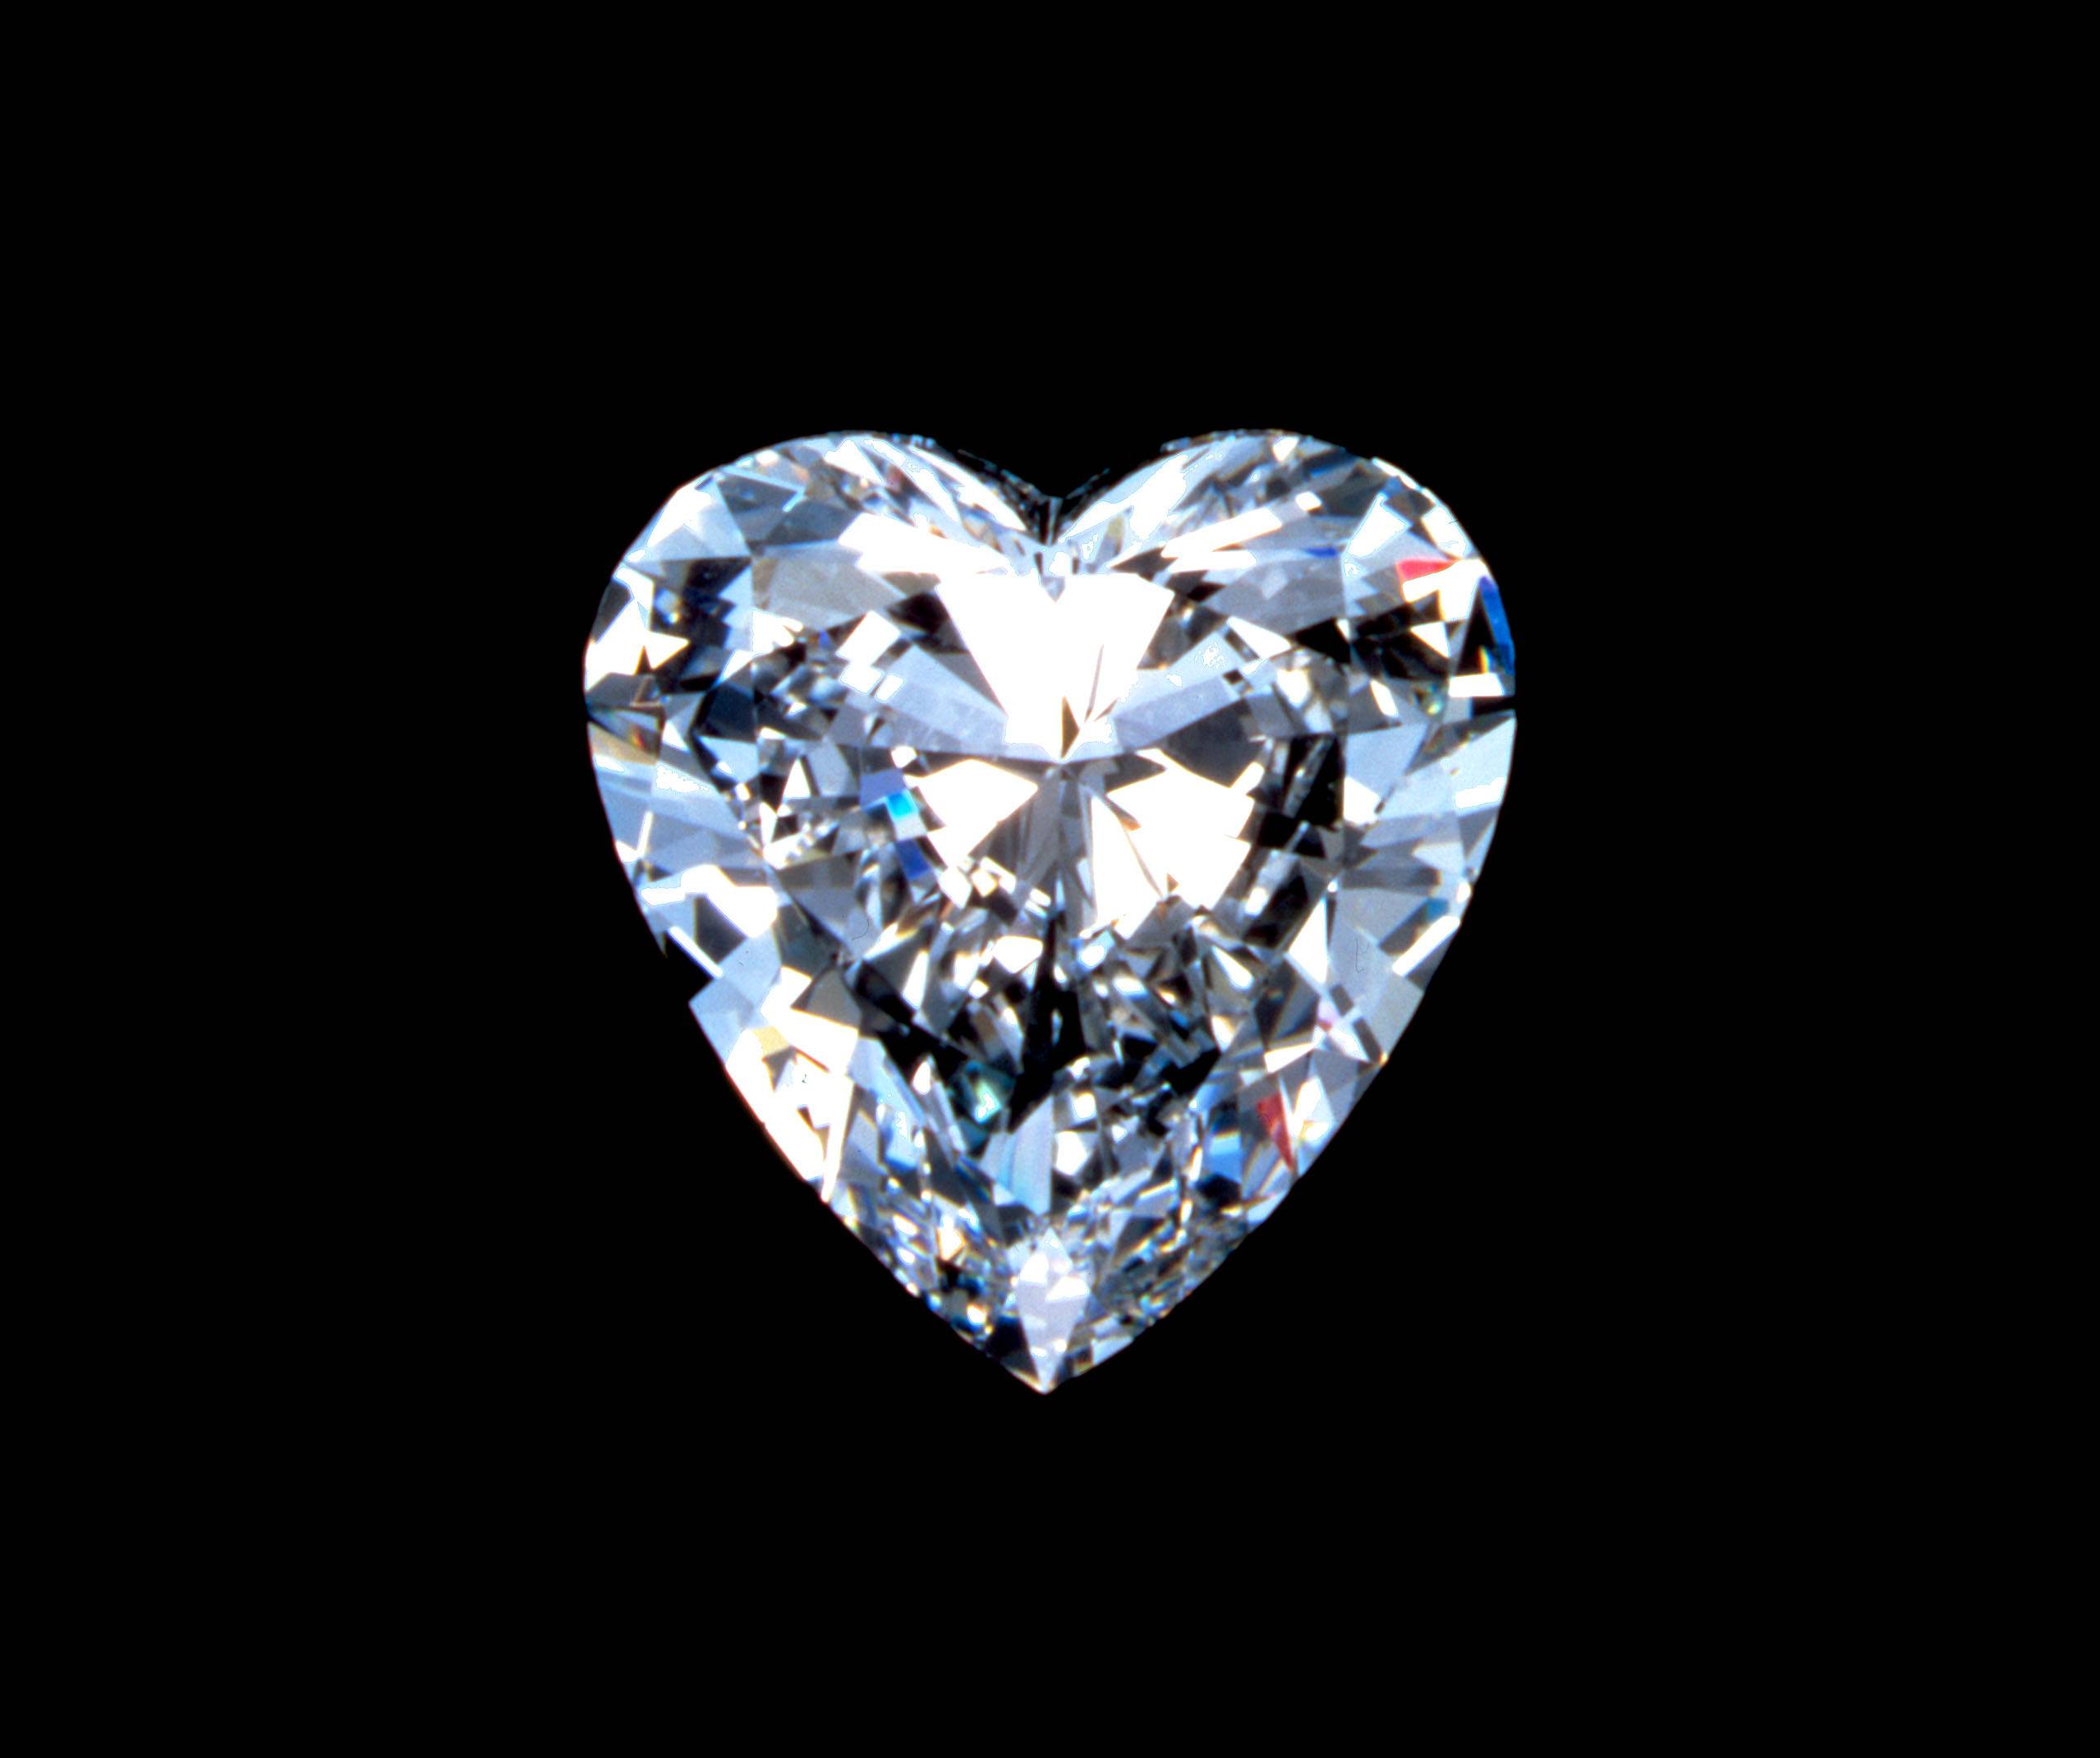 Heart Shaped Diamond   diamonds Picture